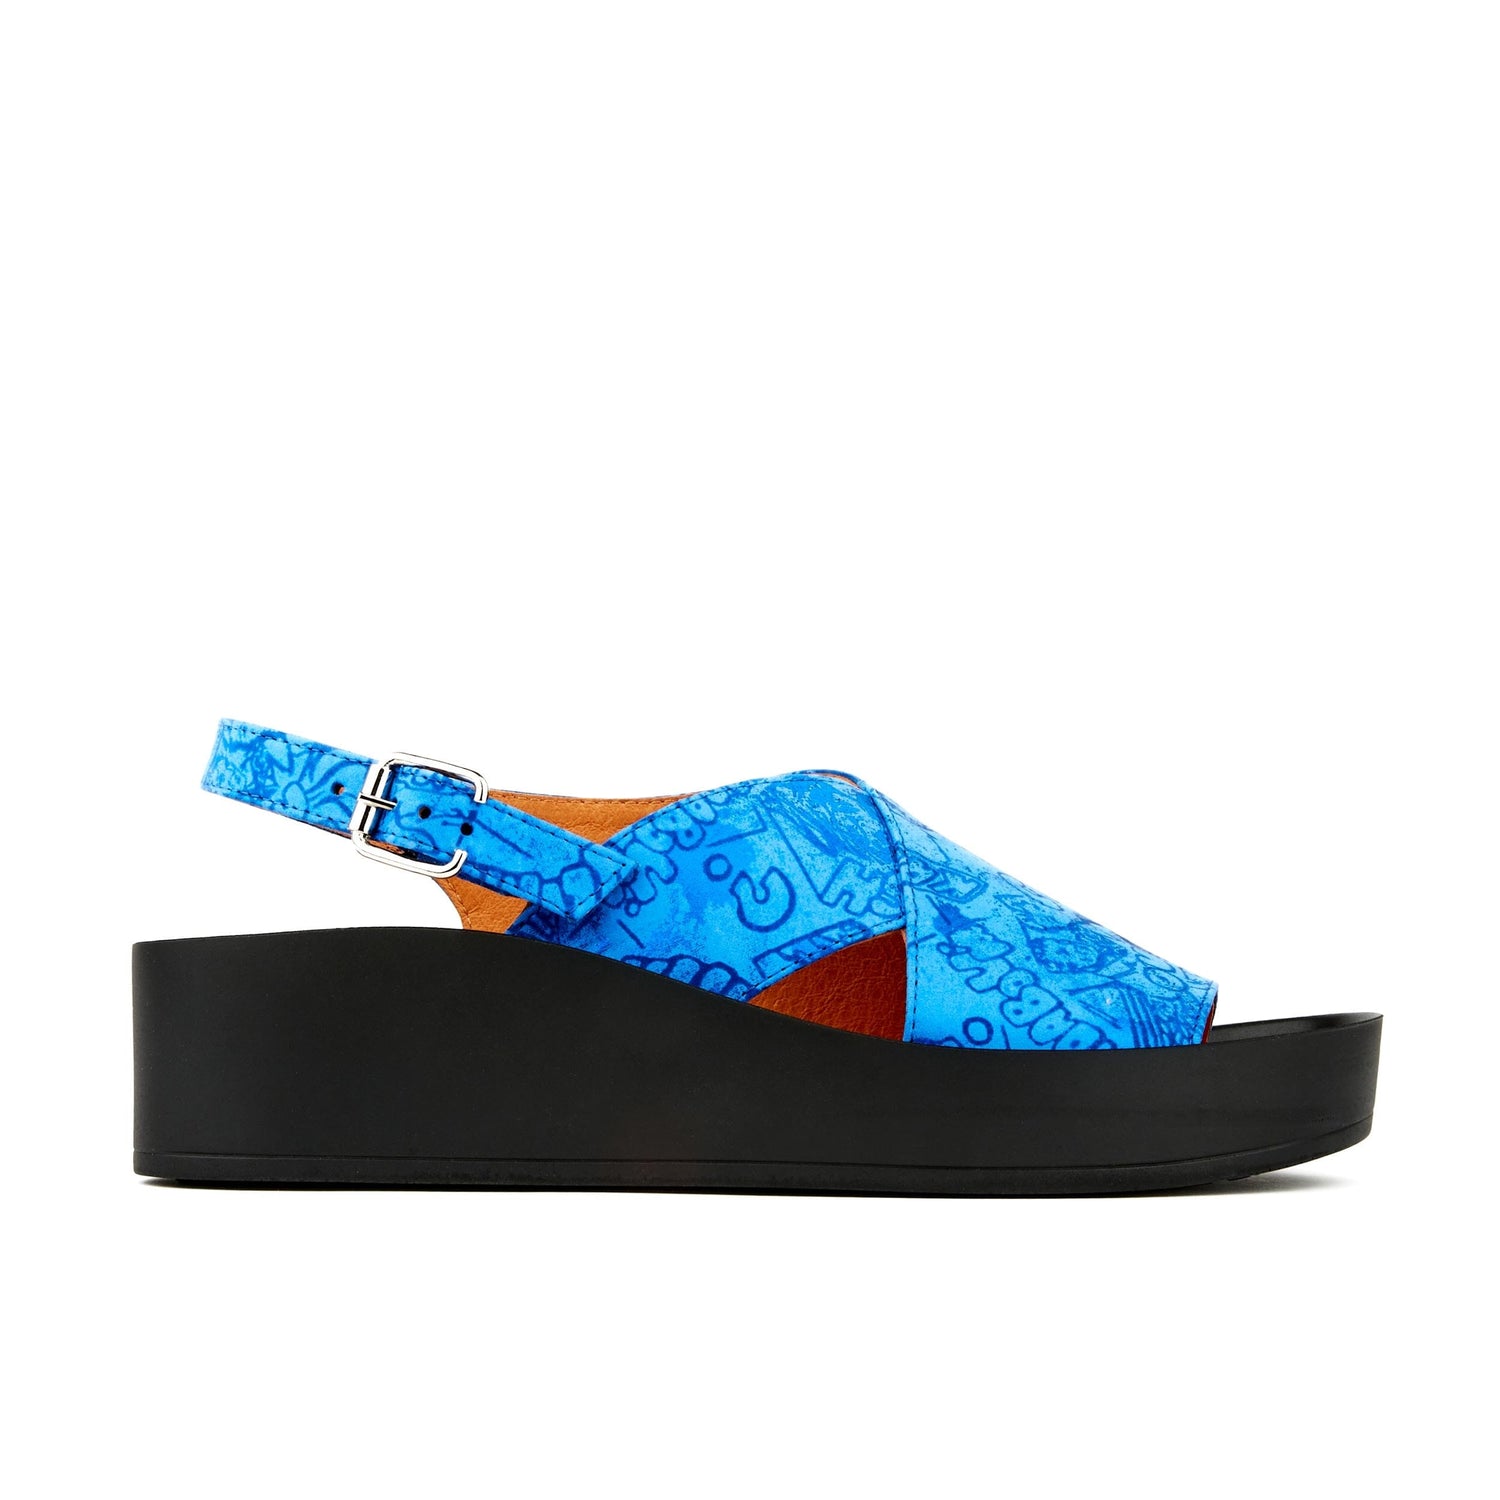 Shop Women's Designer Sandals